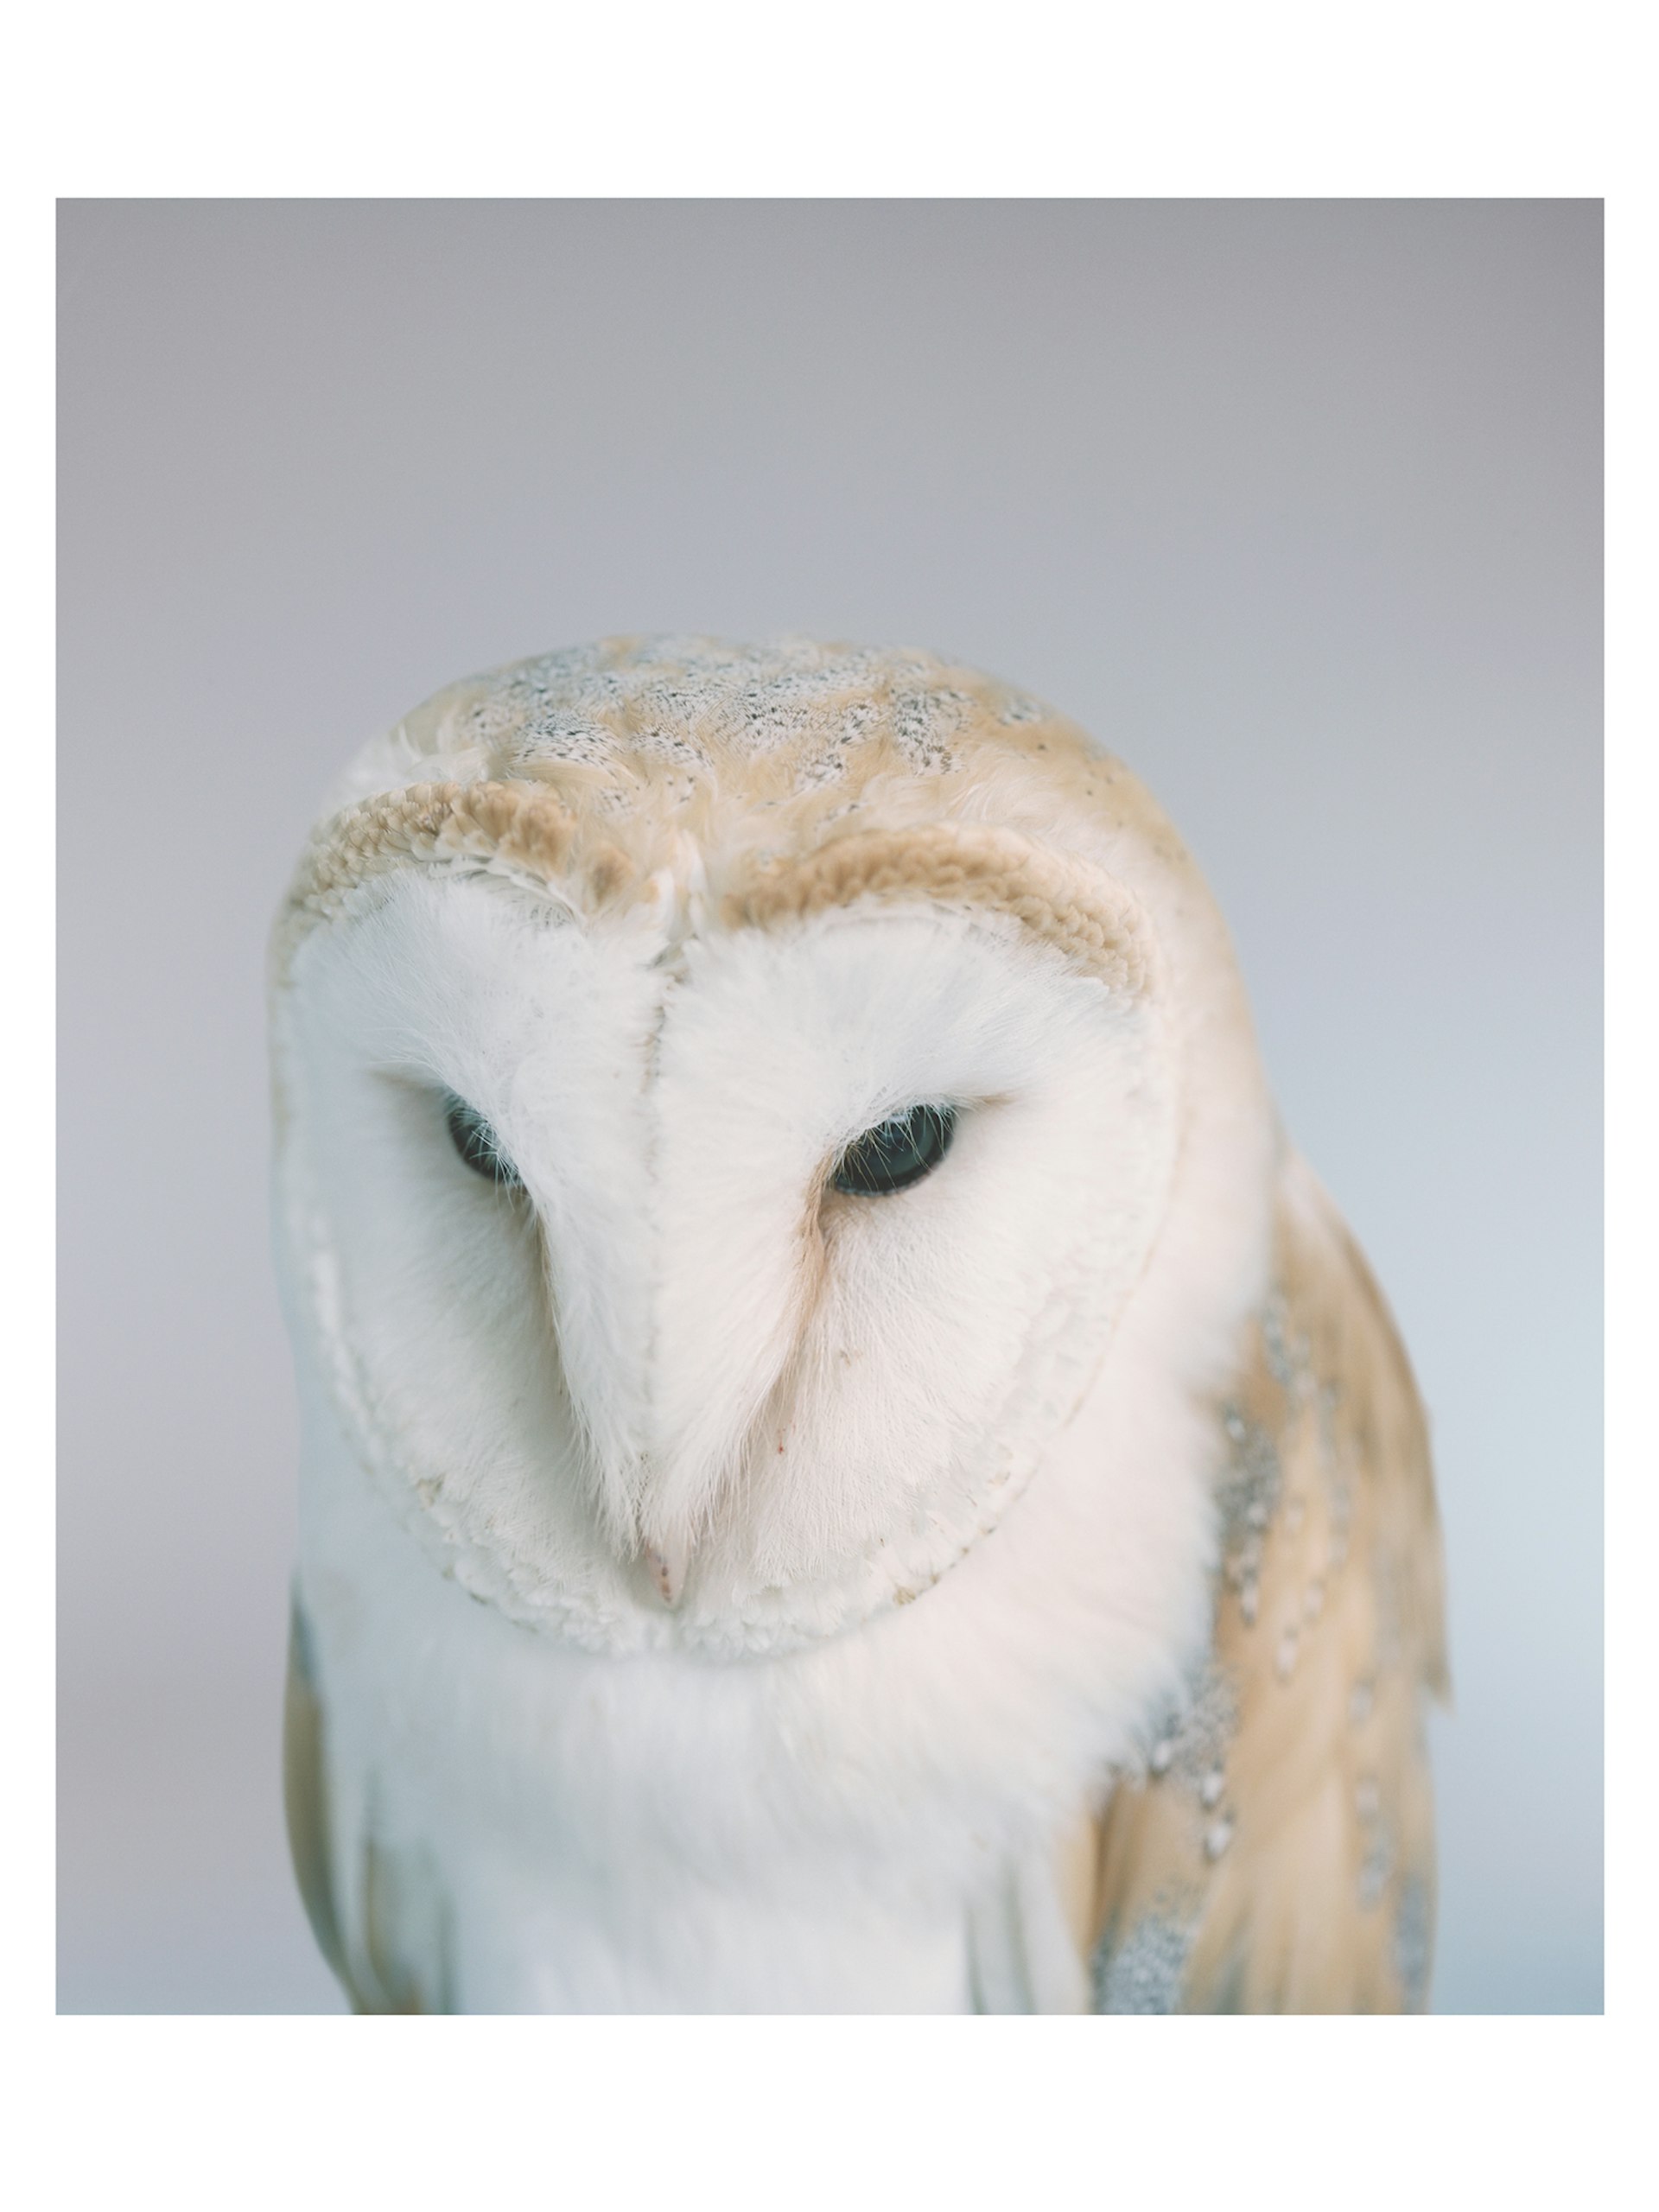 Barn Owl, 2014